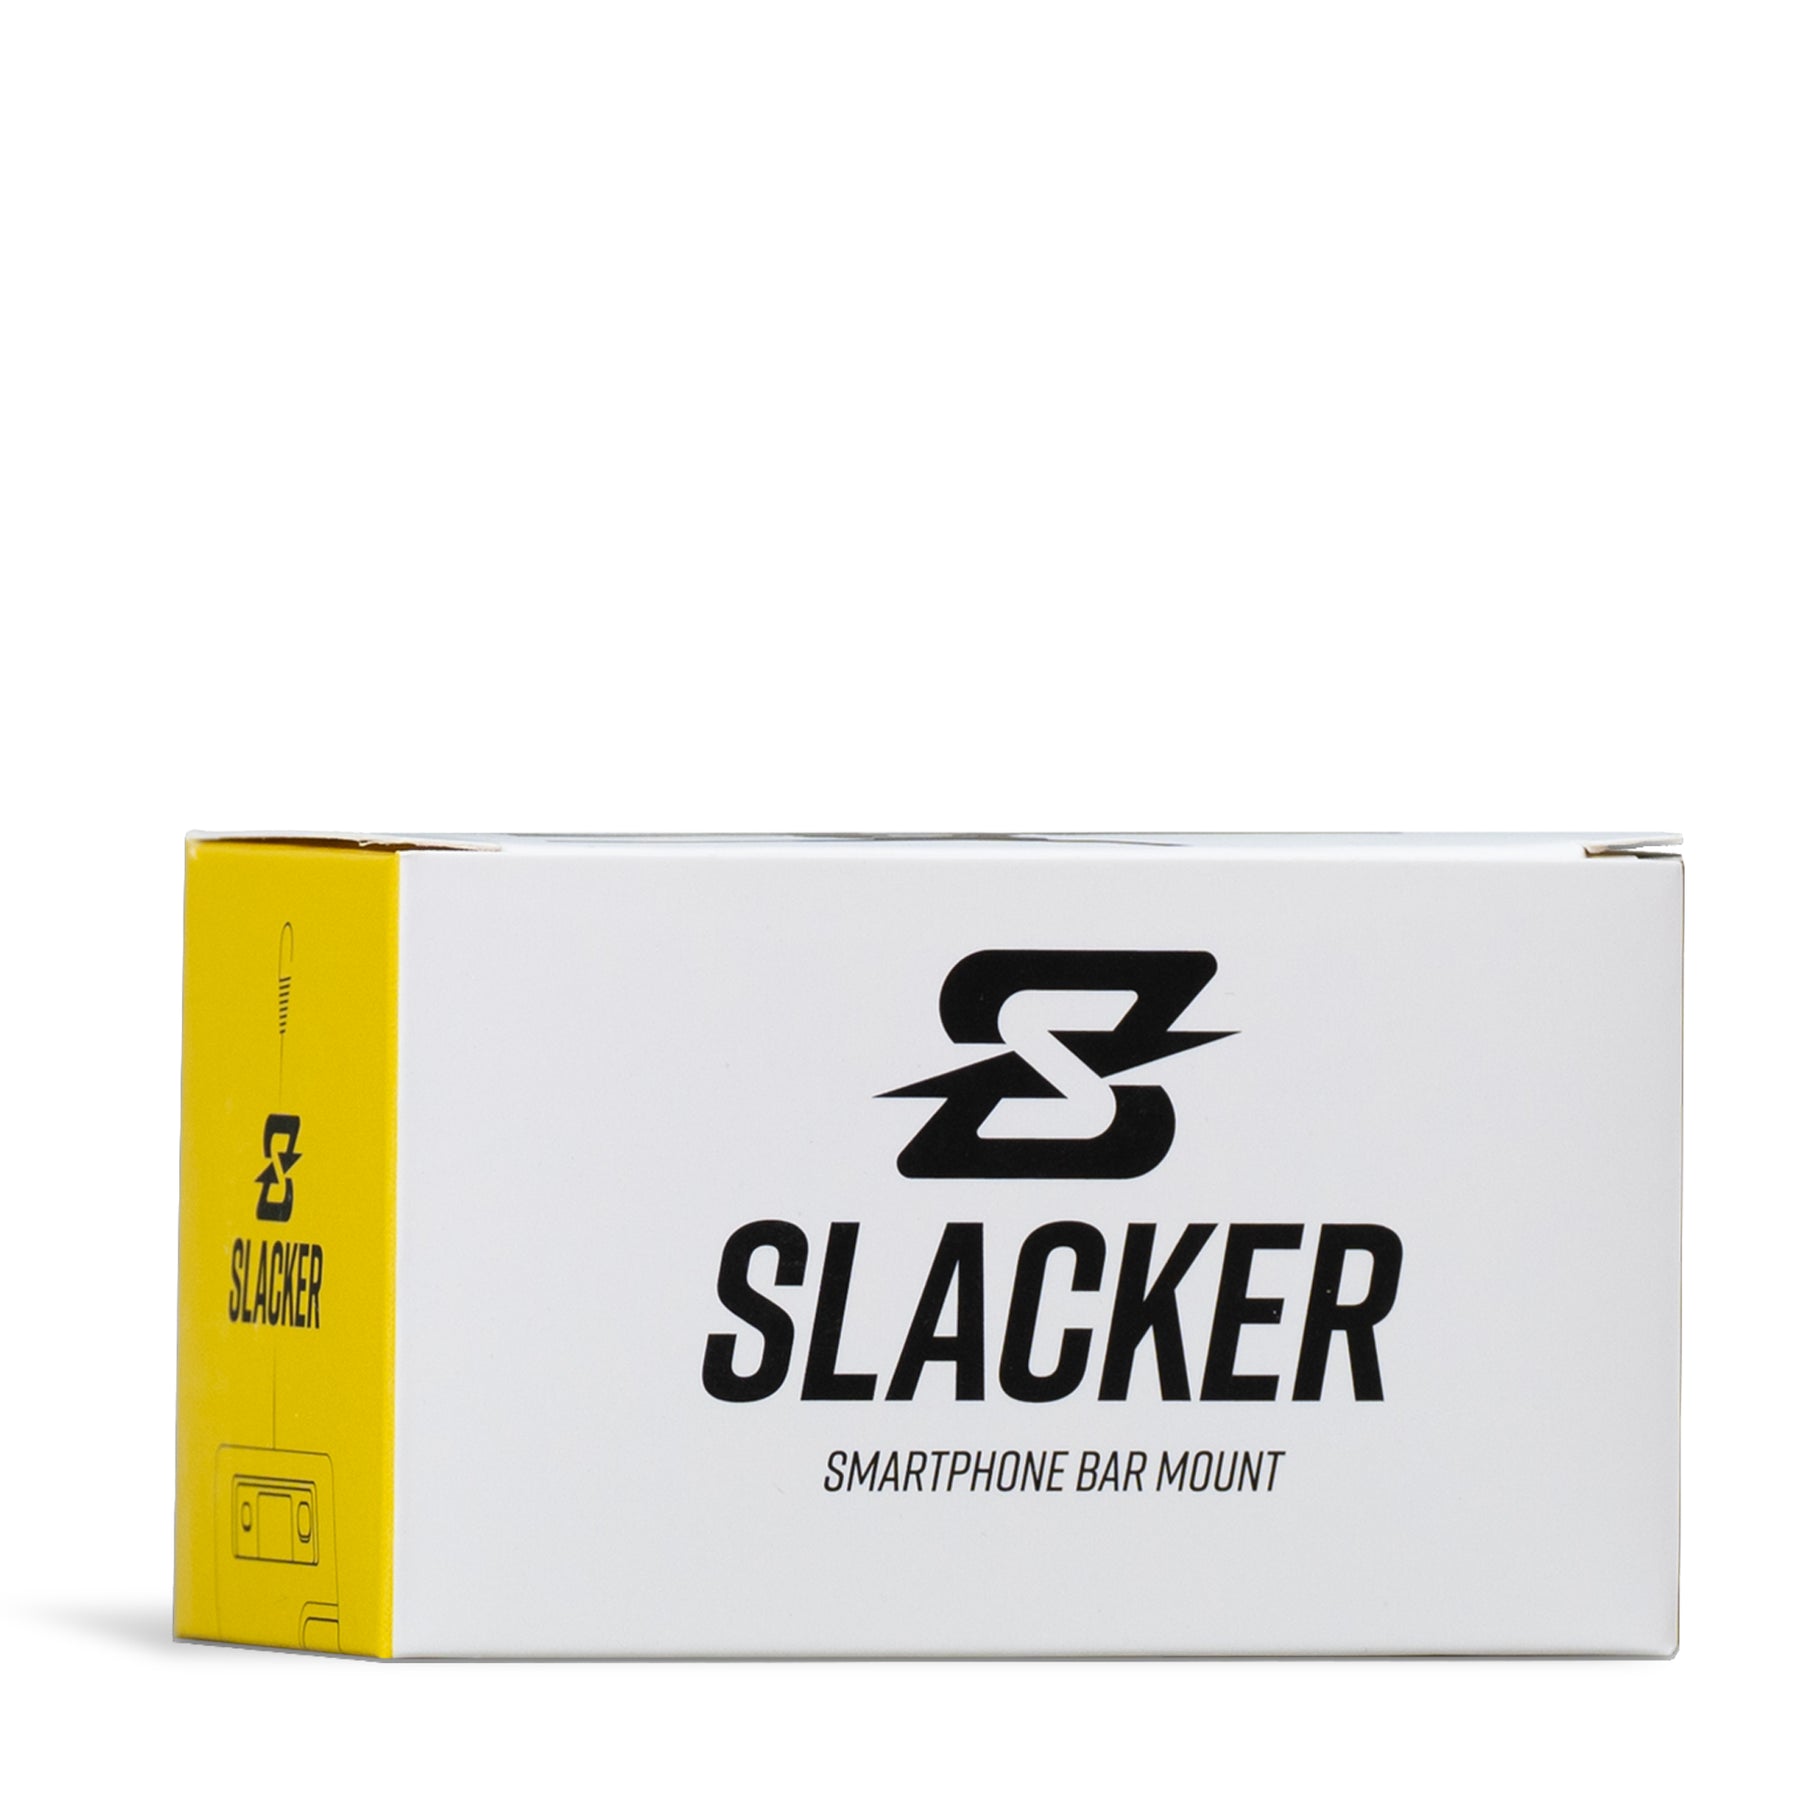 Slacker MTB Special Offer - Save $100